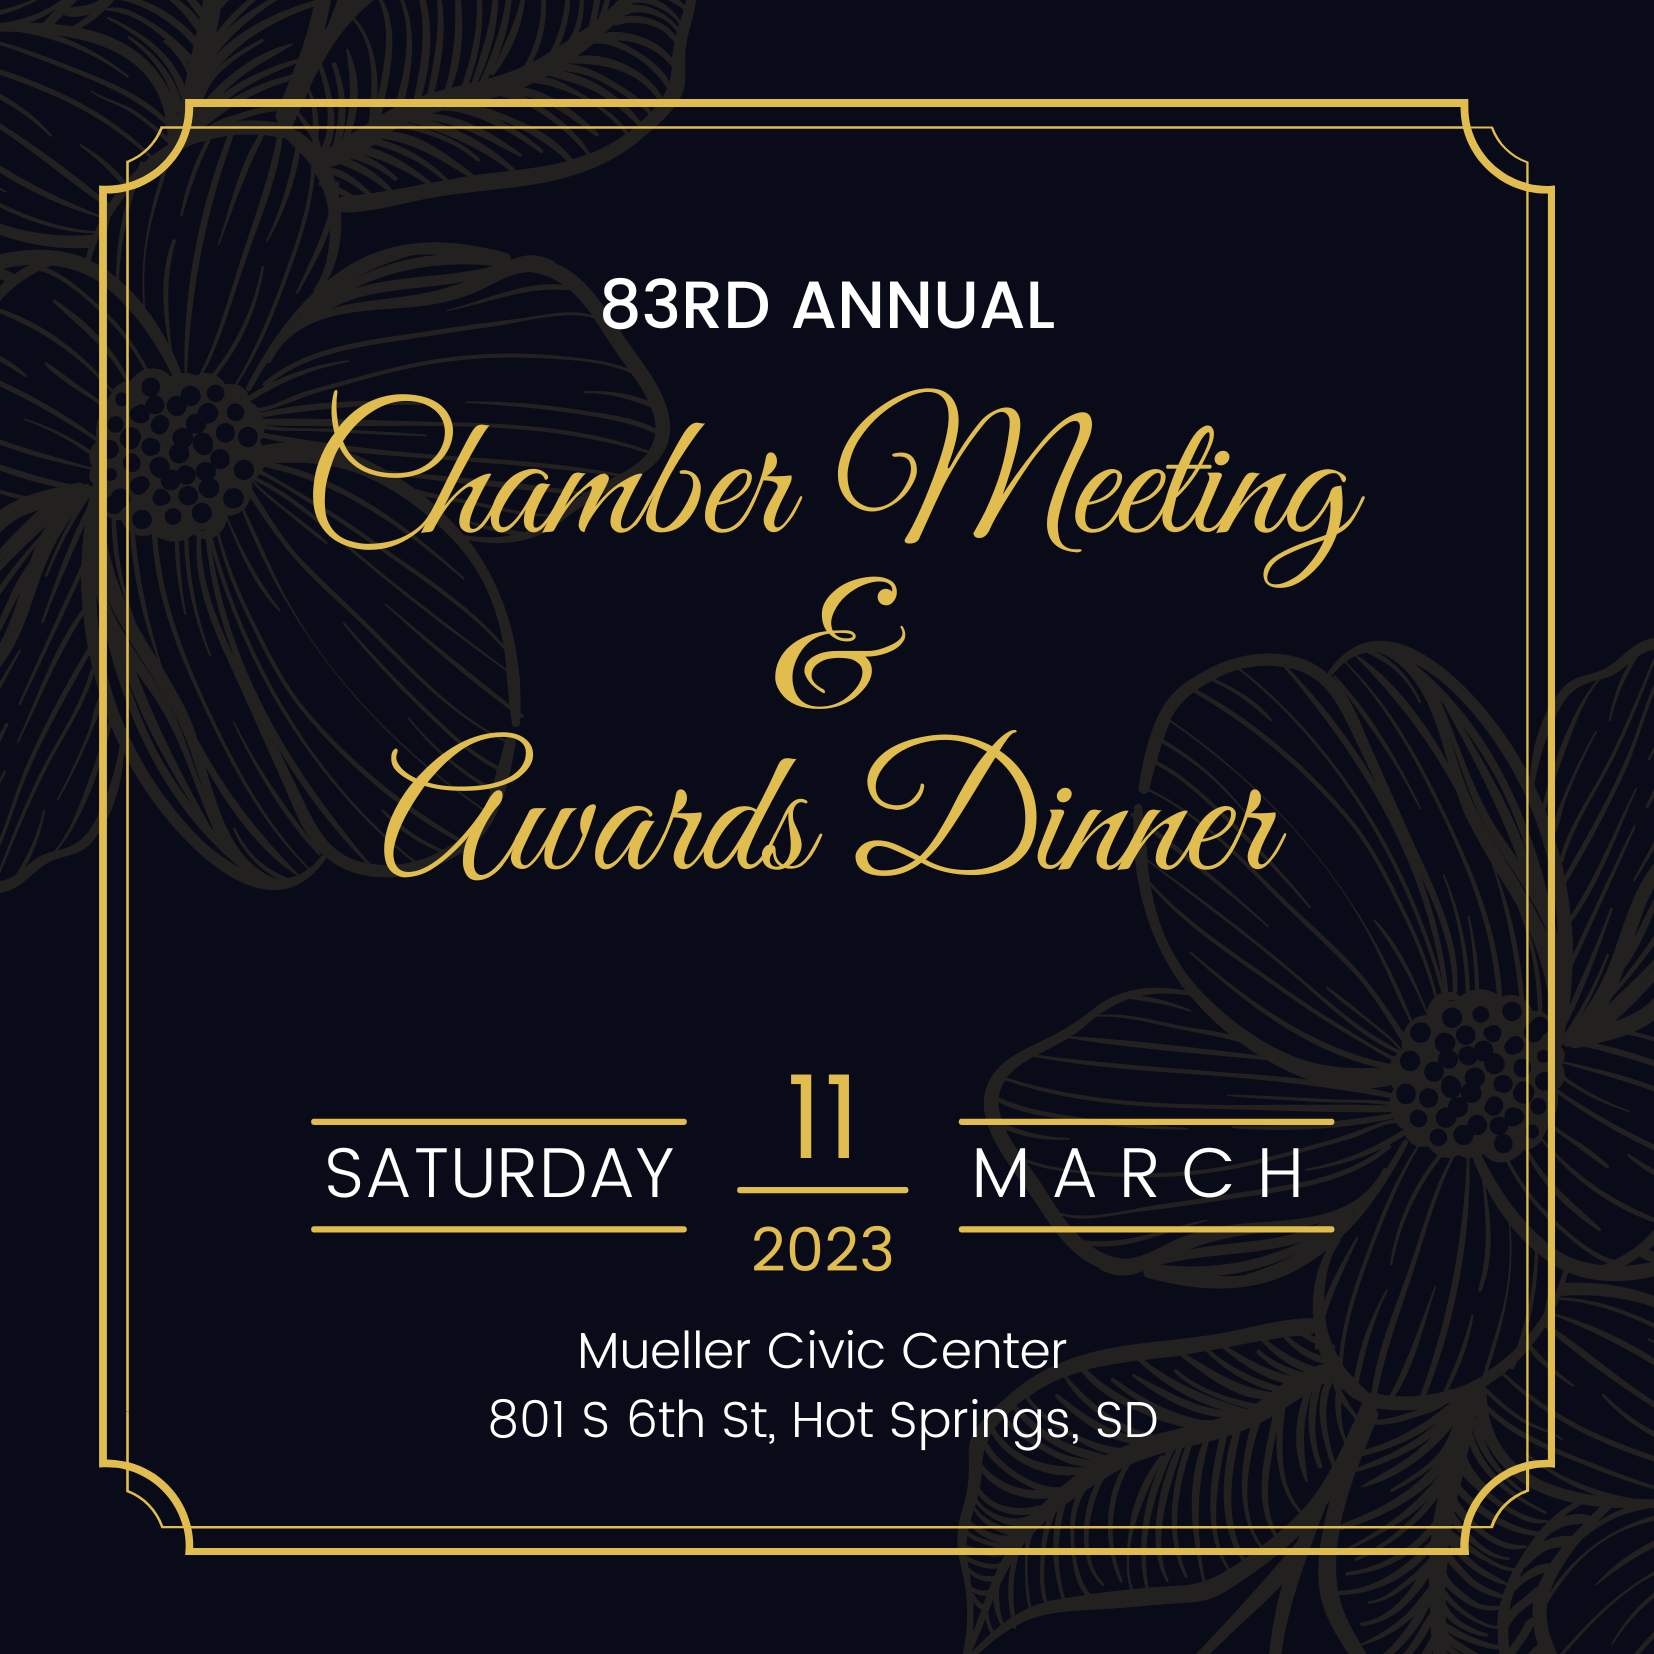 Chamber Annual Meeting & Awards Dinner